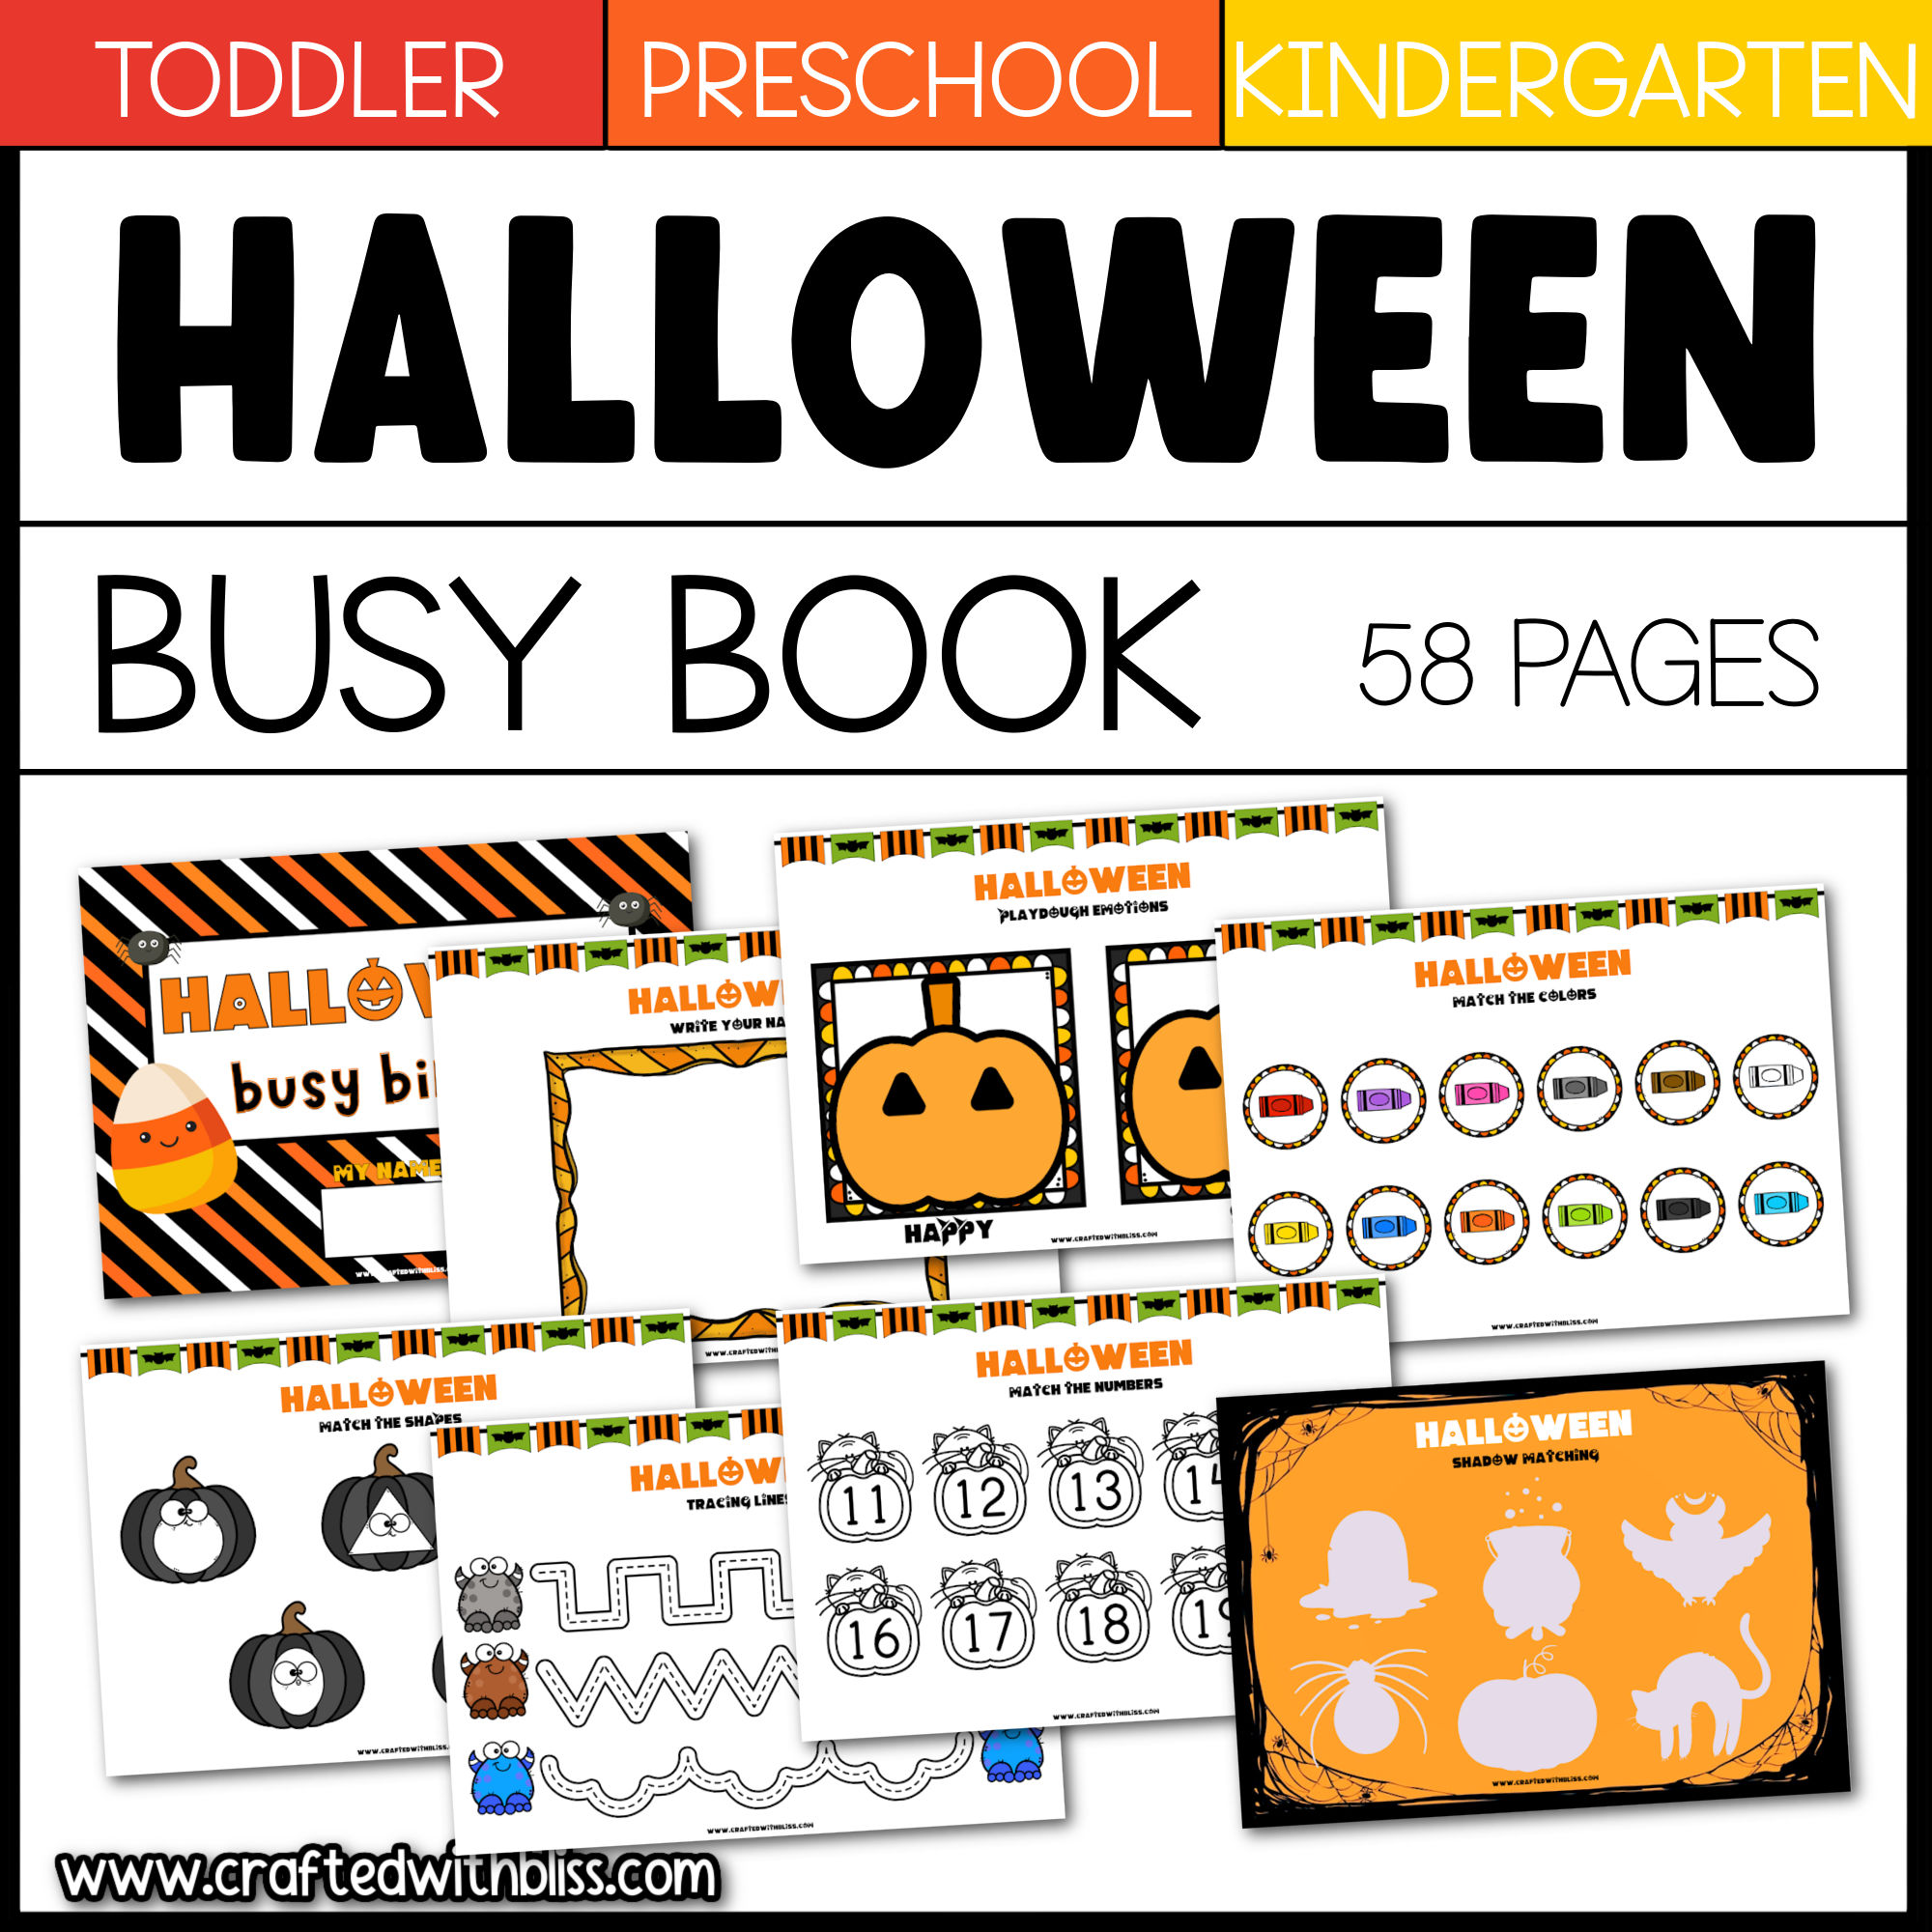 FREE Halloween Busy Book Binder